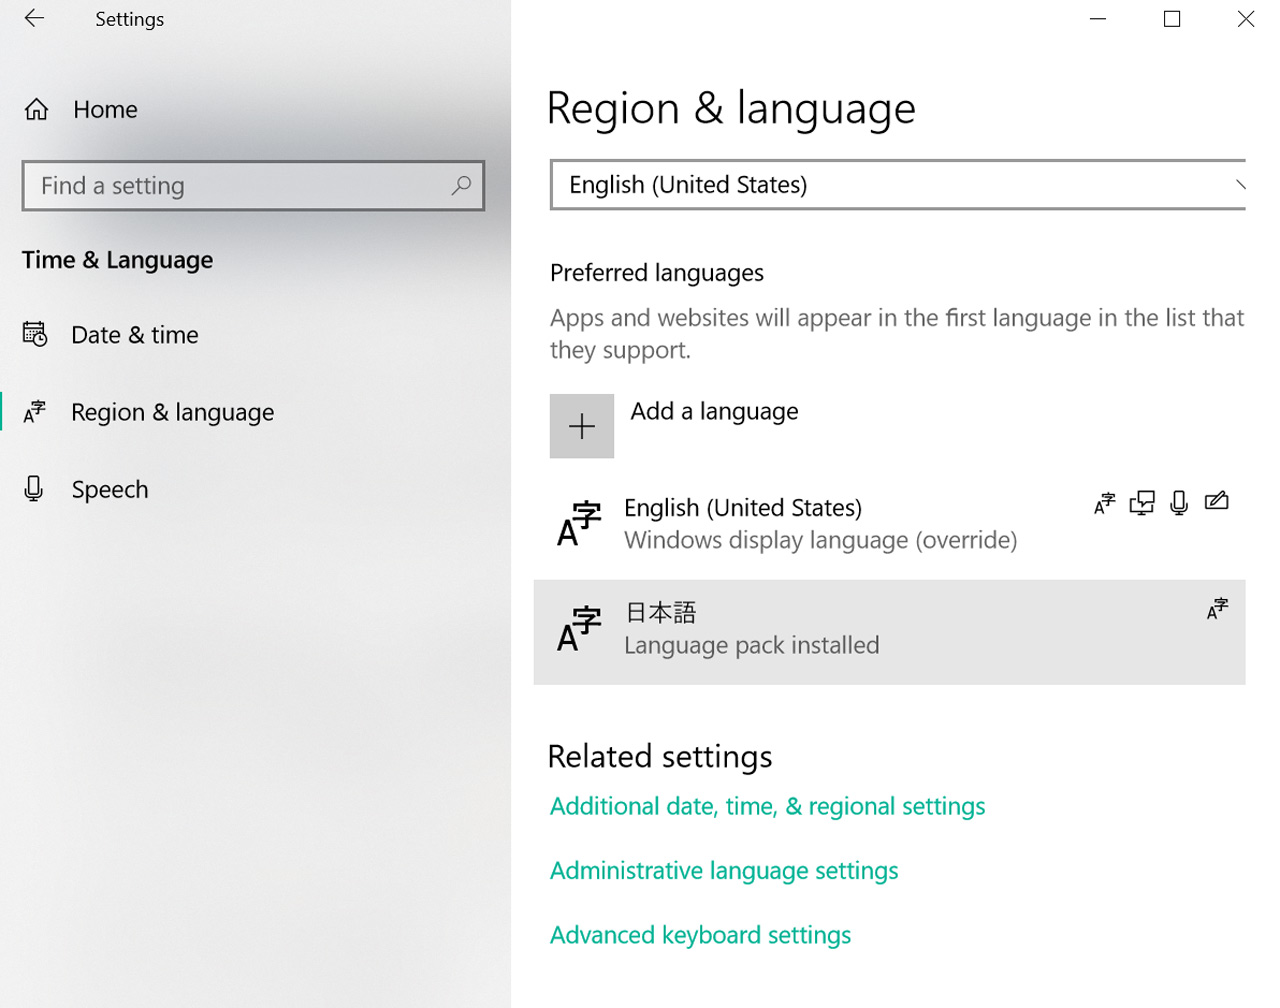 windows 10 language pack installed